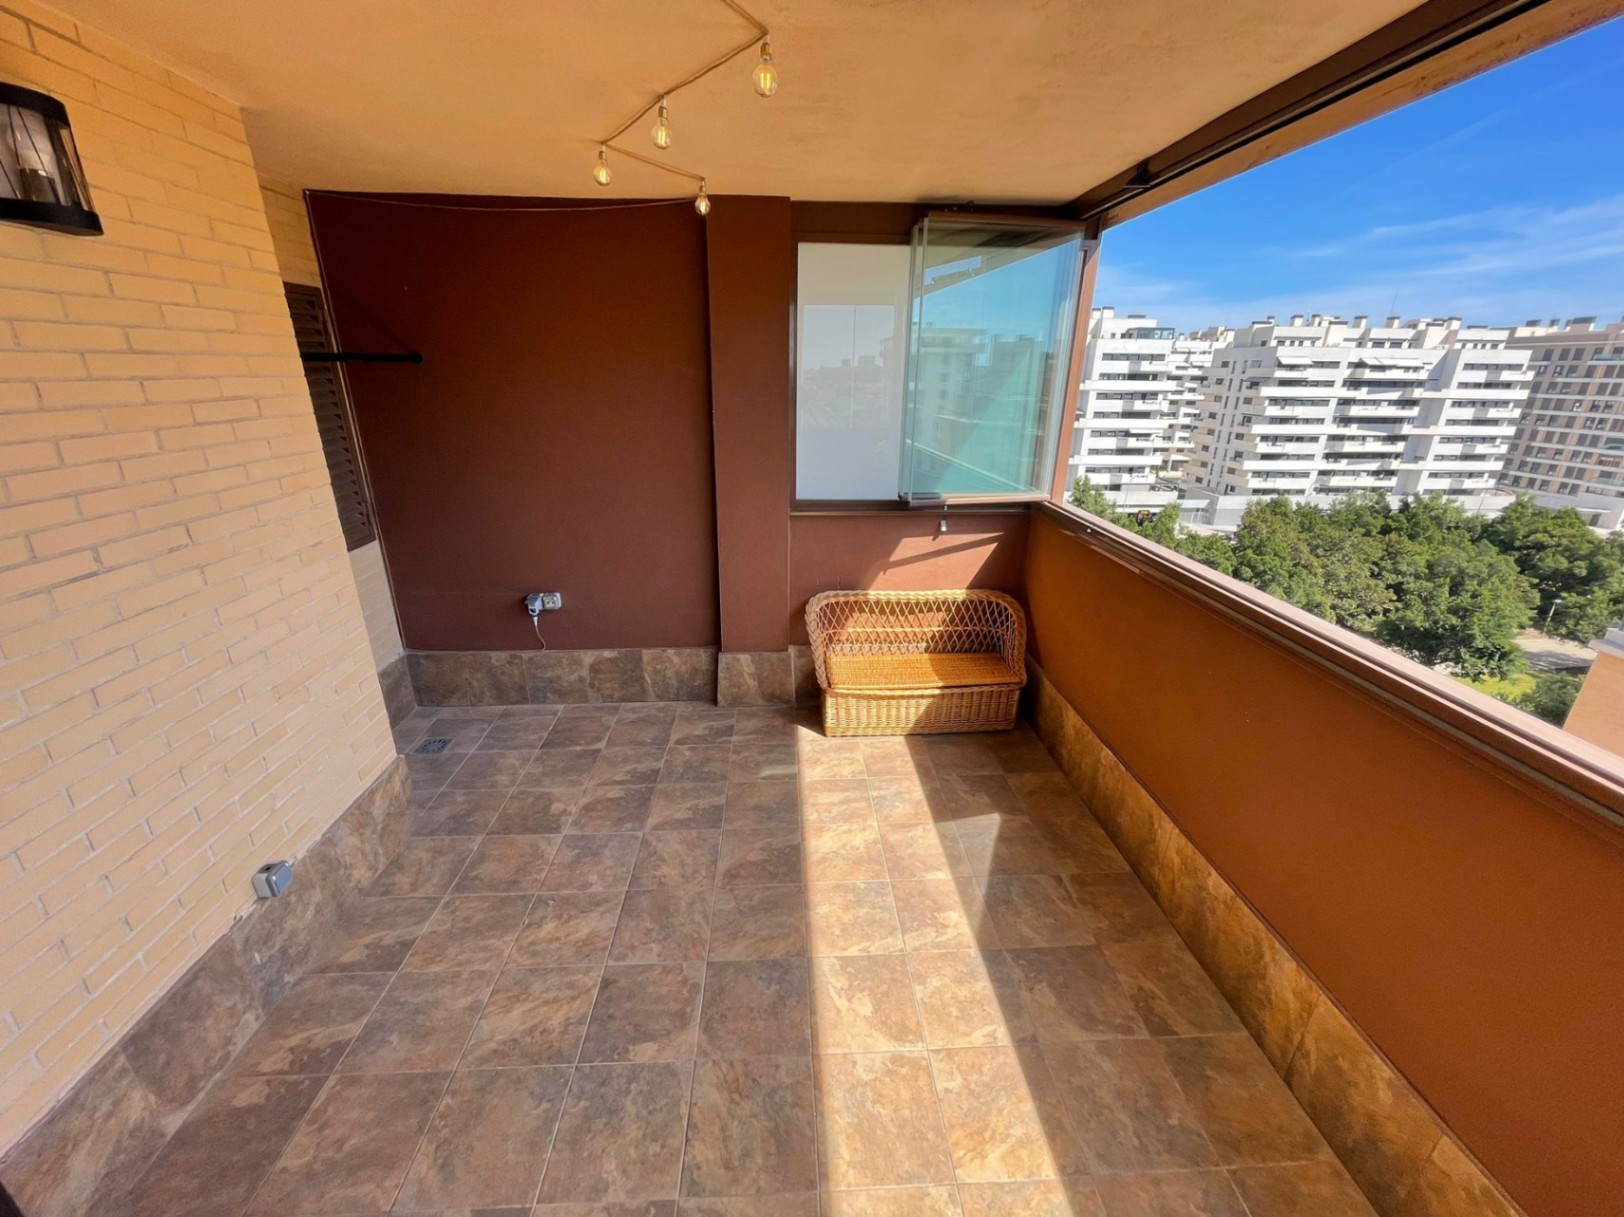 Apartment for sale on the beach of San Juan, PAU5, Alicante